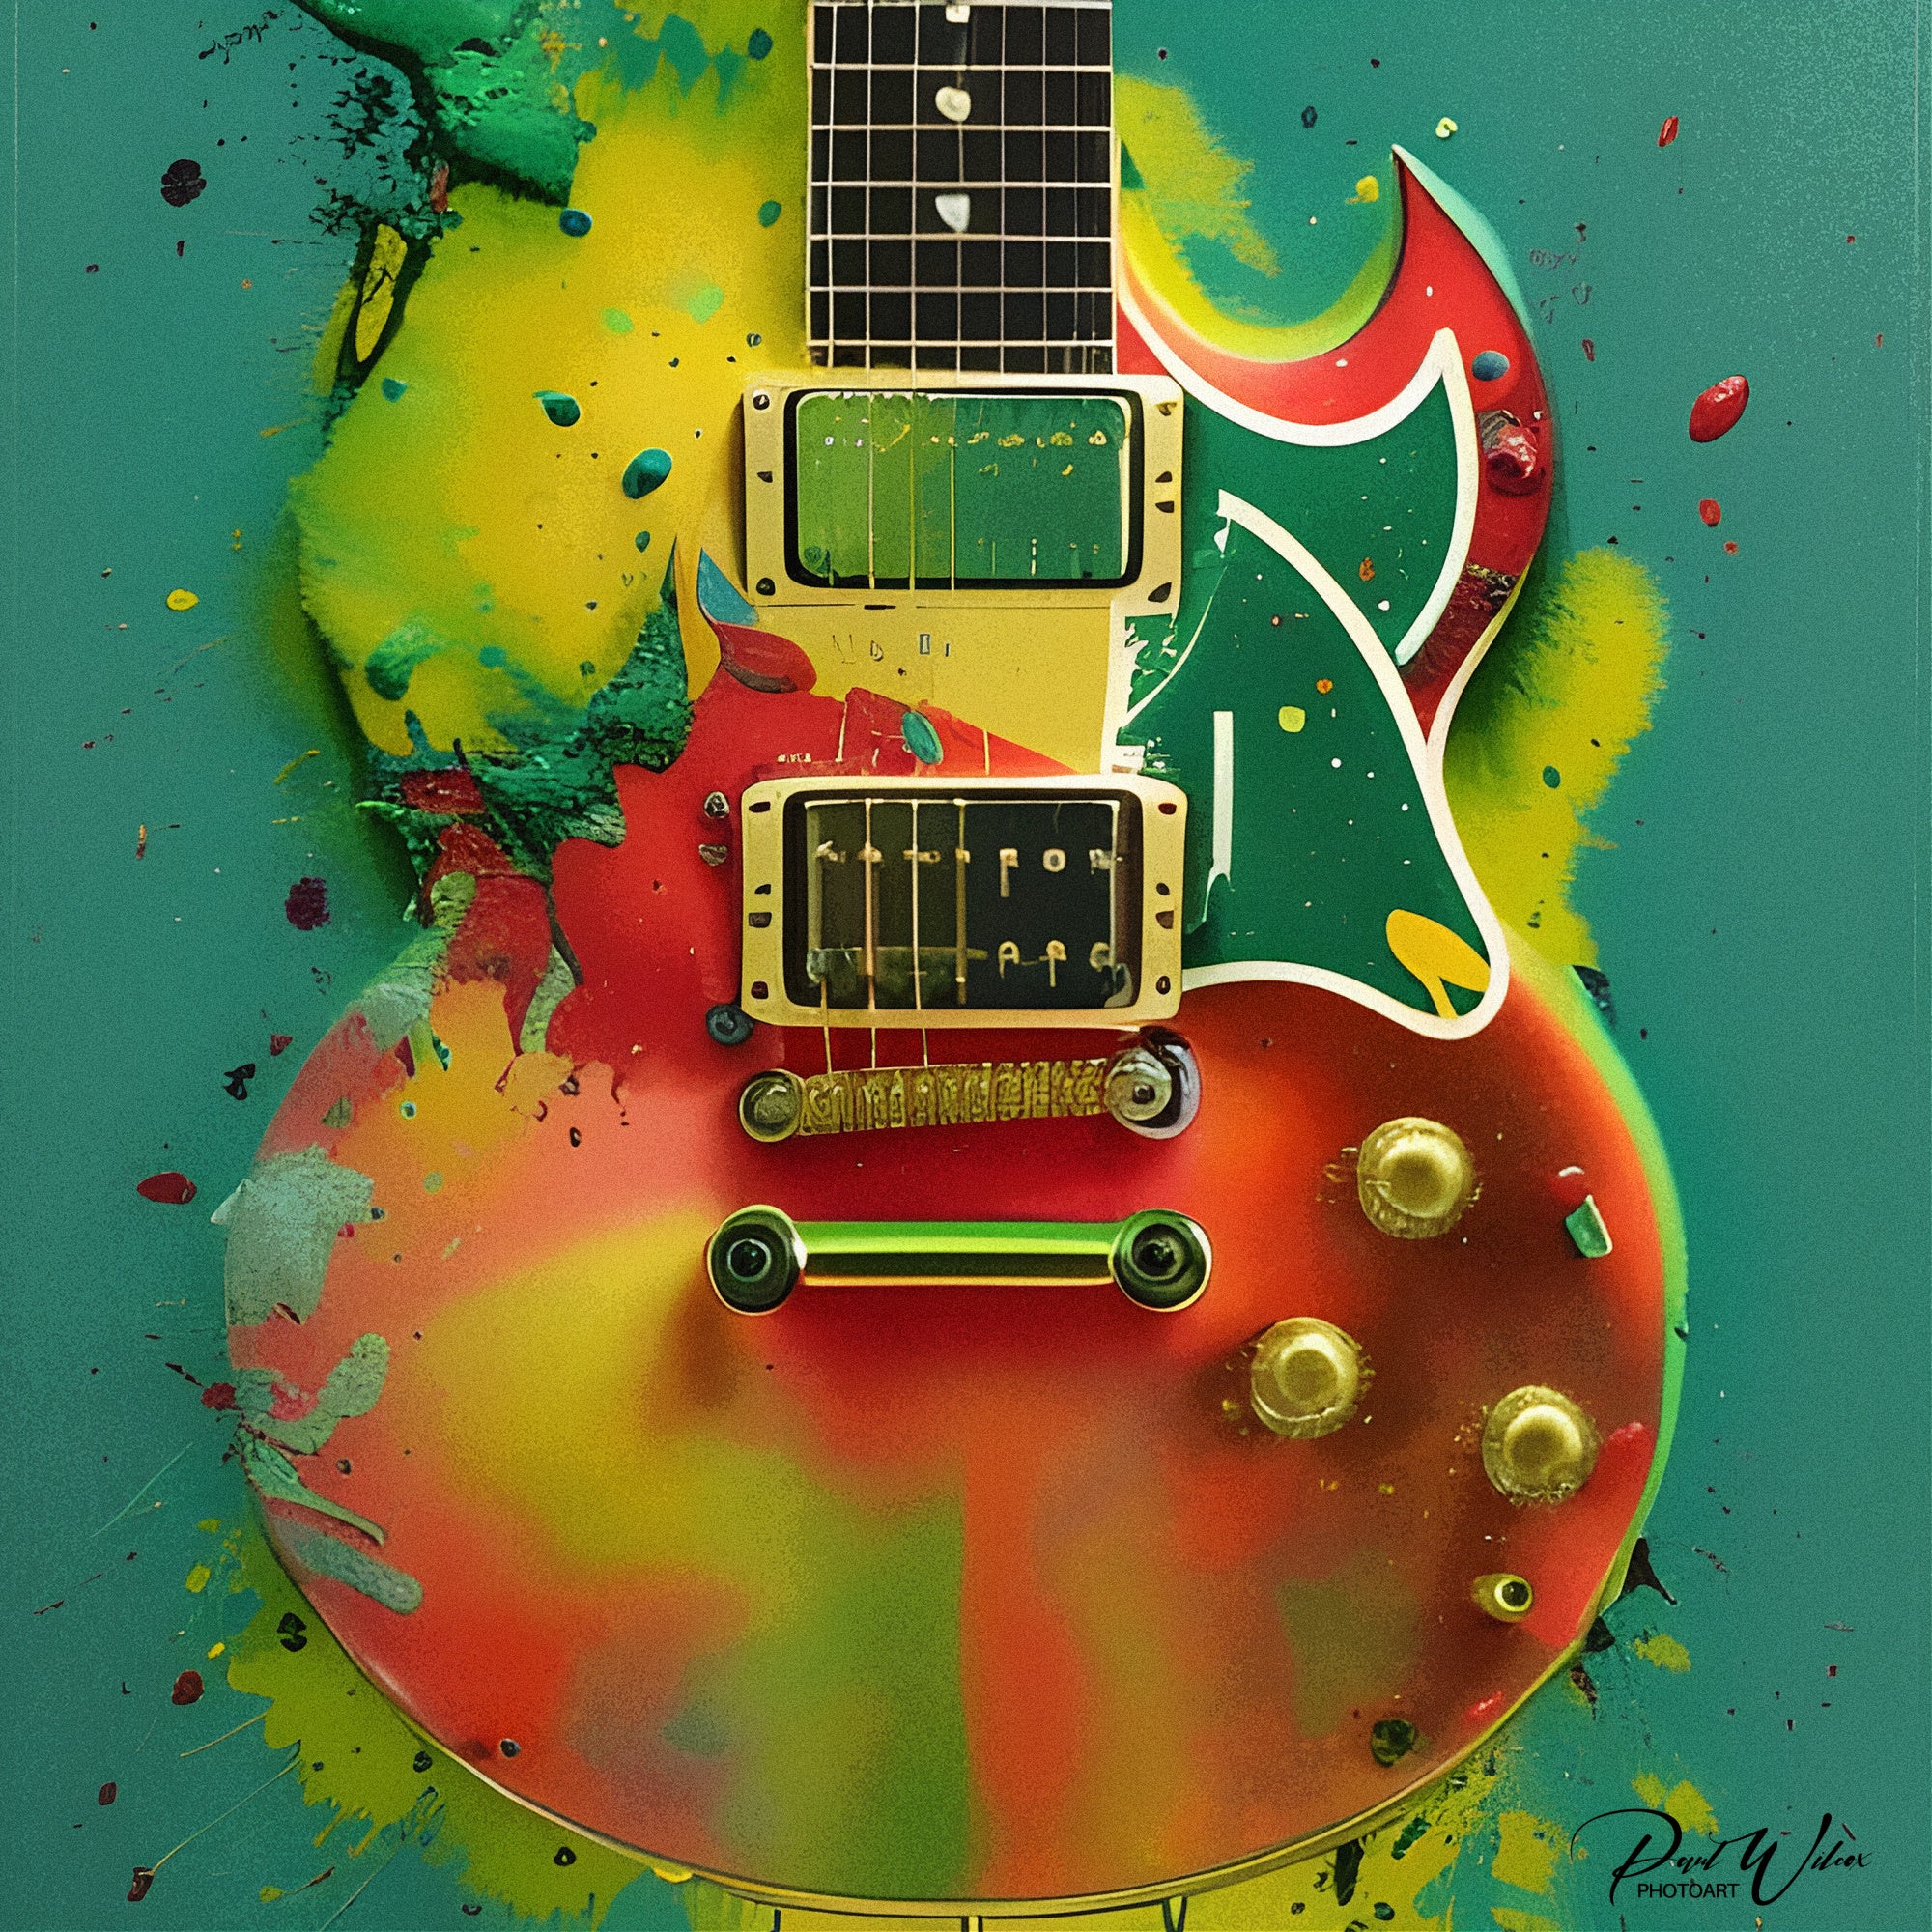 Abstract Gibson SG Guitar - Image